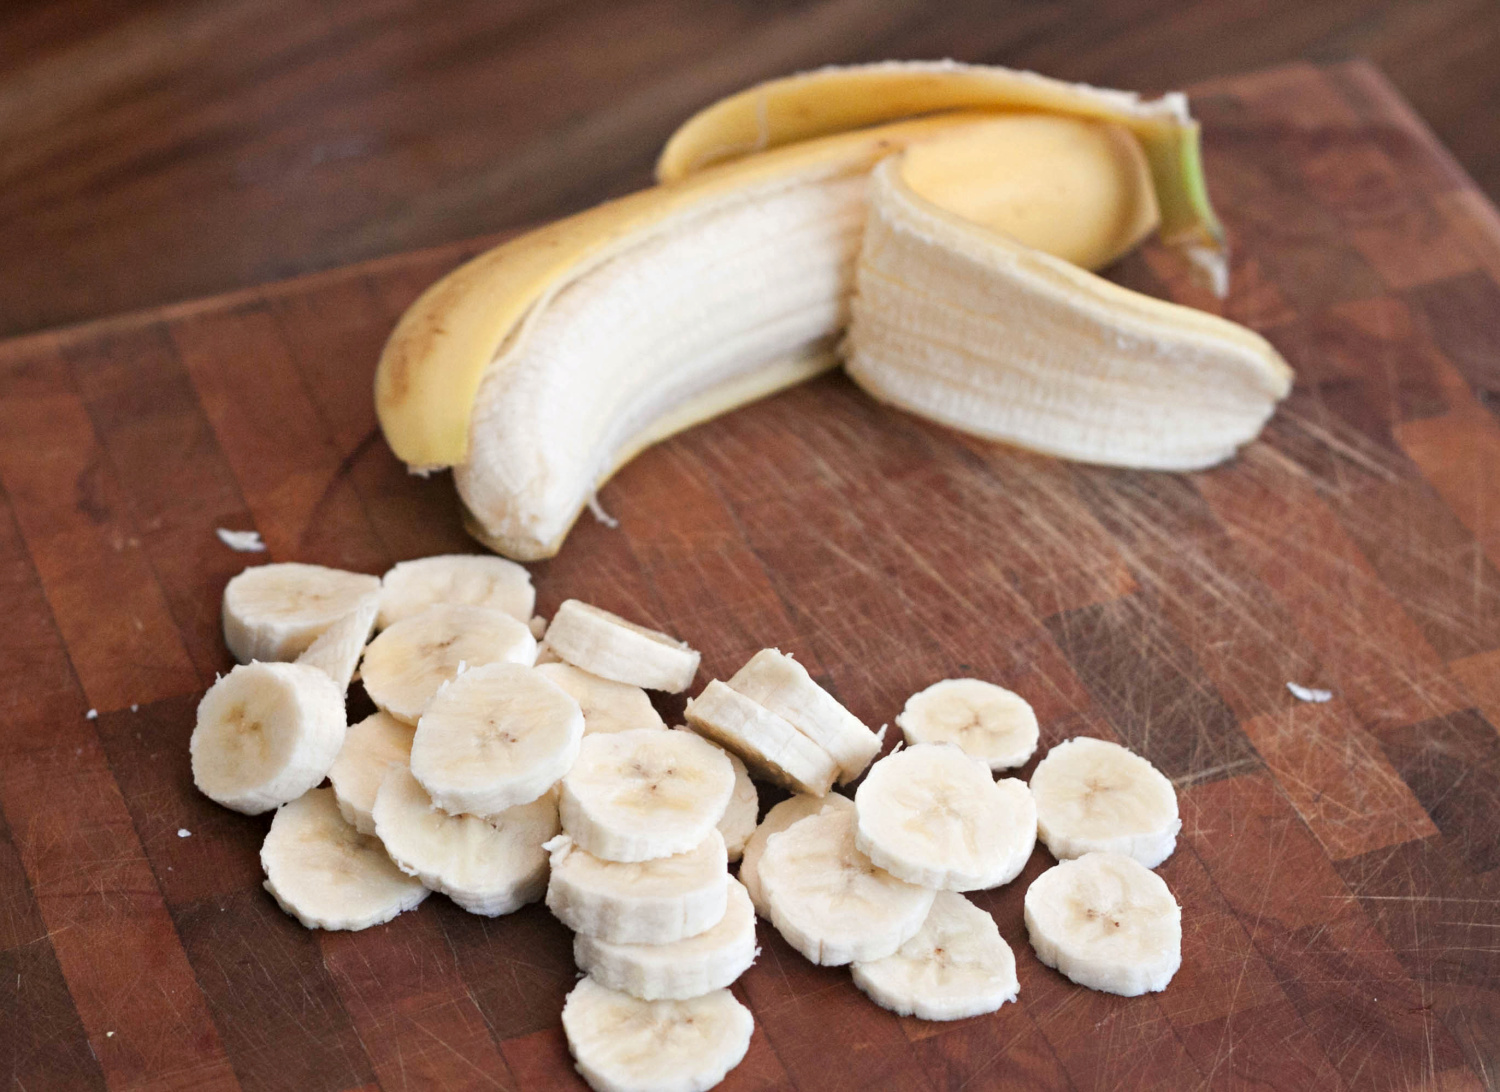 Fresh banana being sliced for Banana Cream Pie recipe